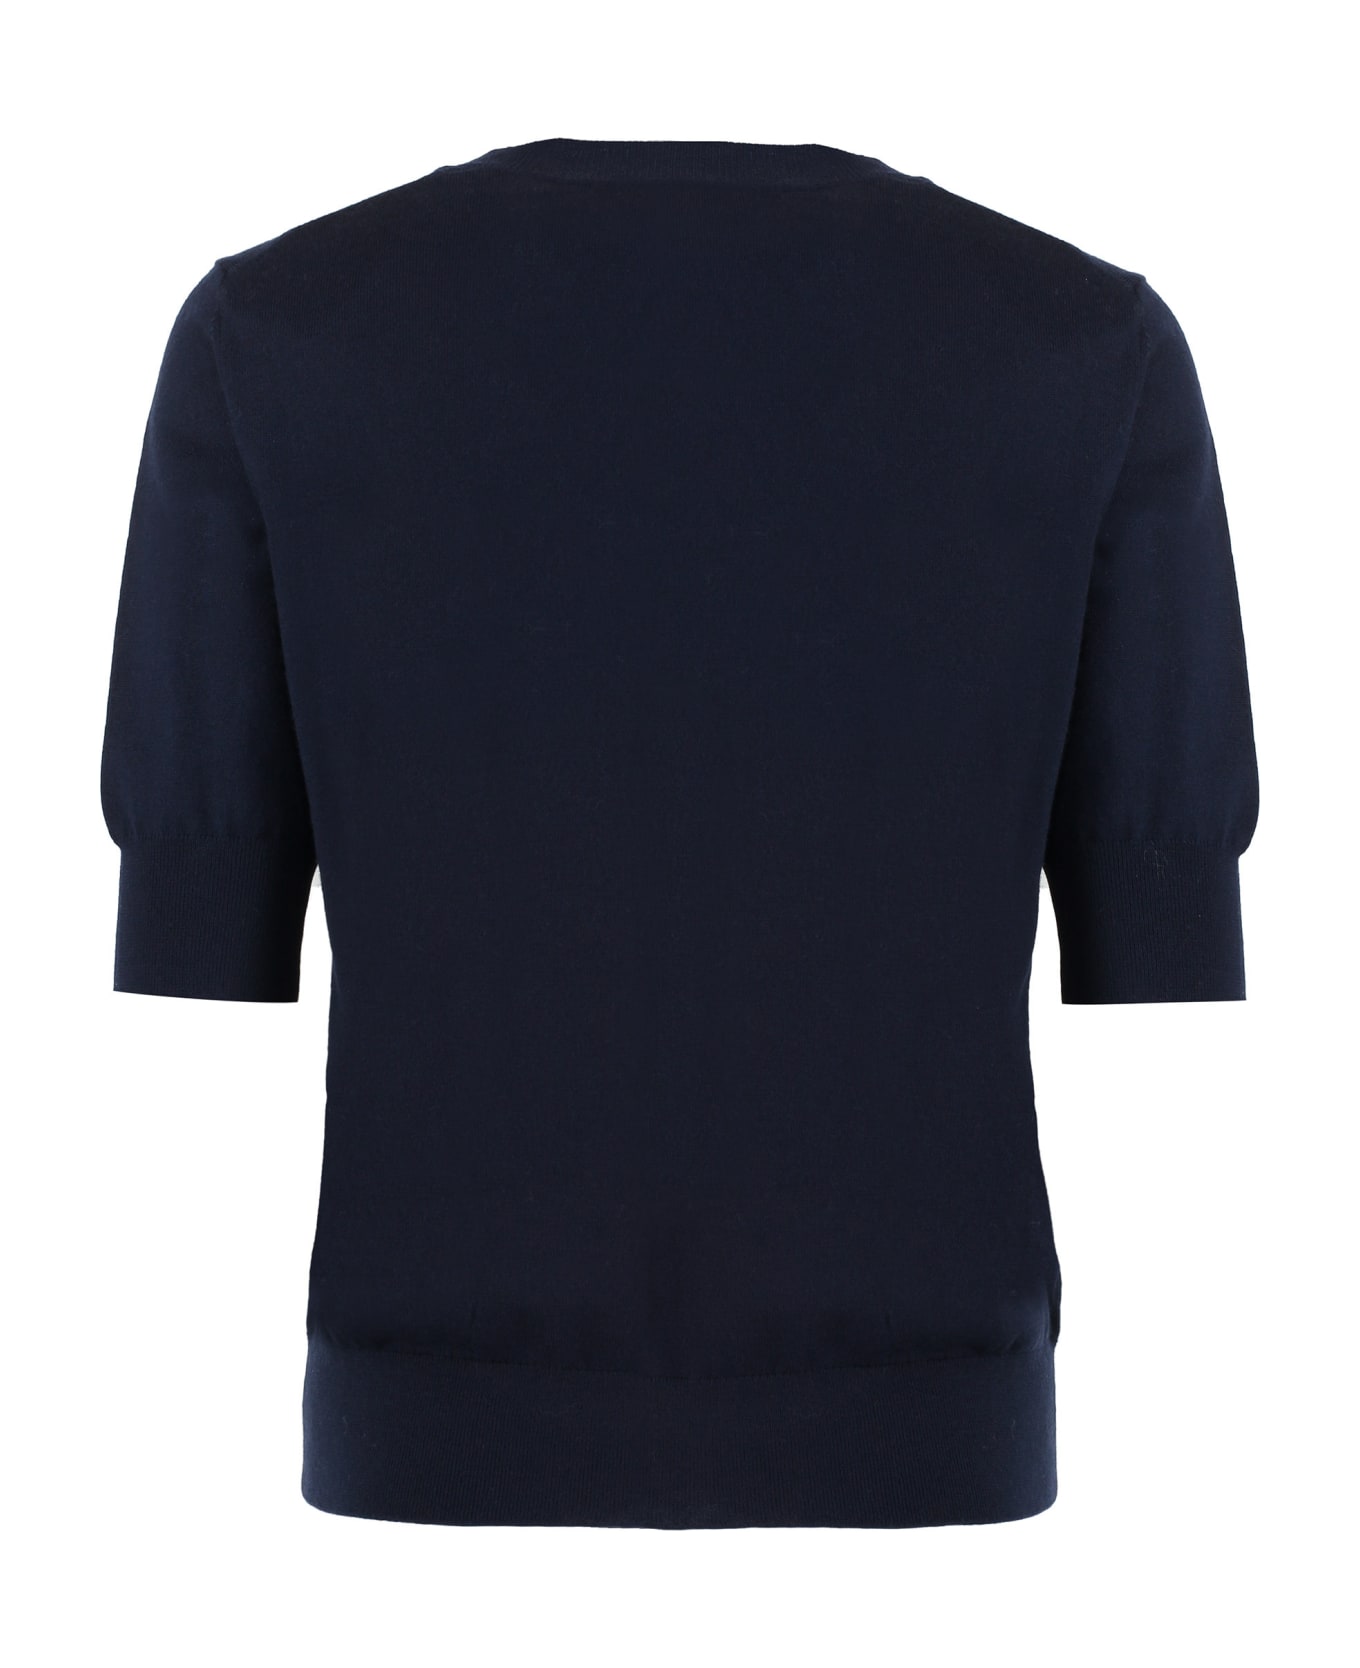 Parosh Short Sleeve Sweater - blue